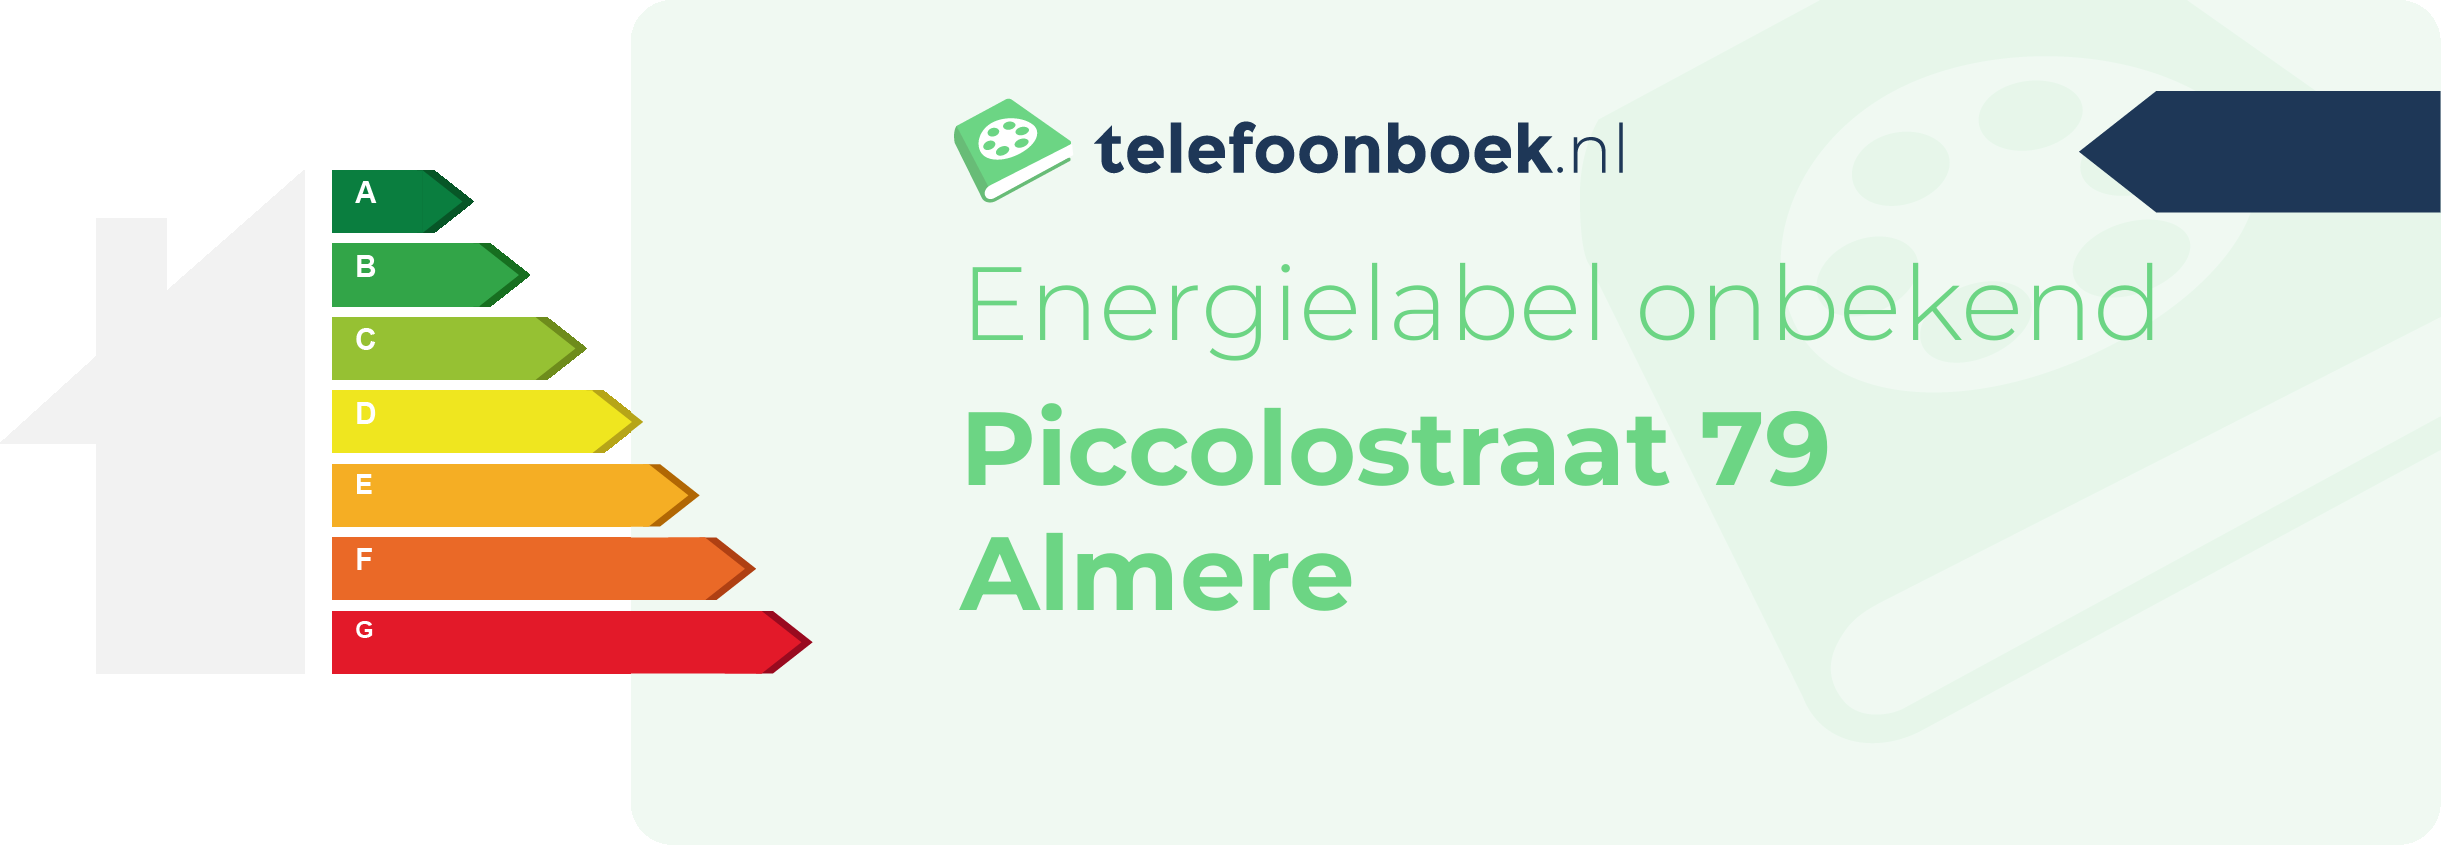 Energielabel Piccolostraat 79 Almere